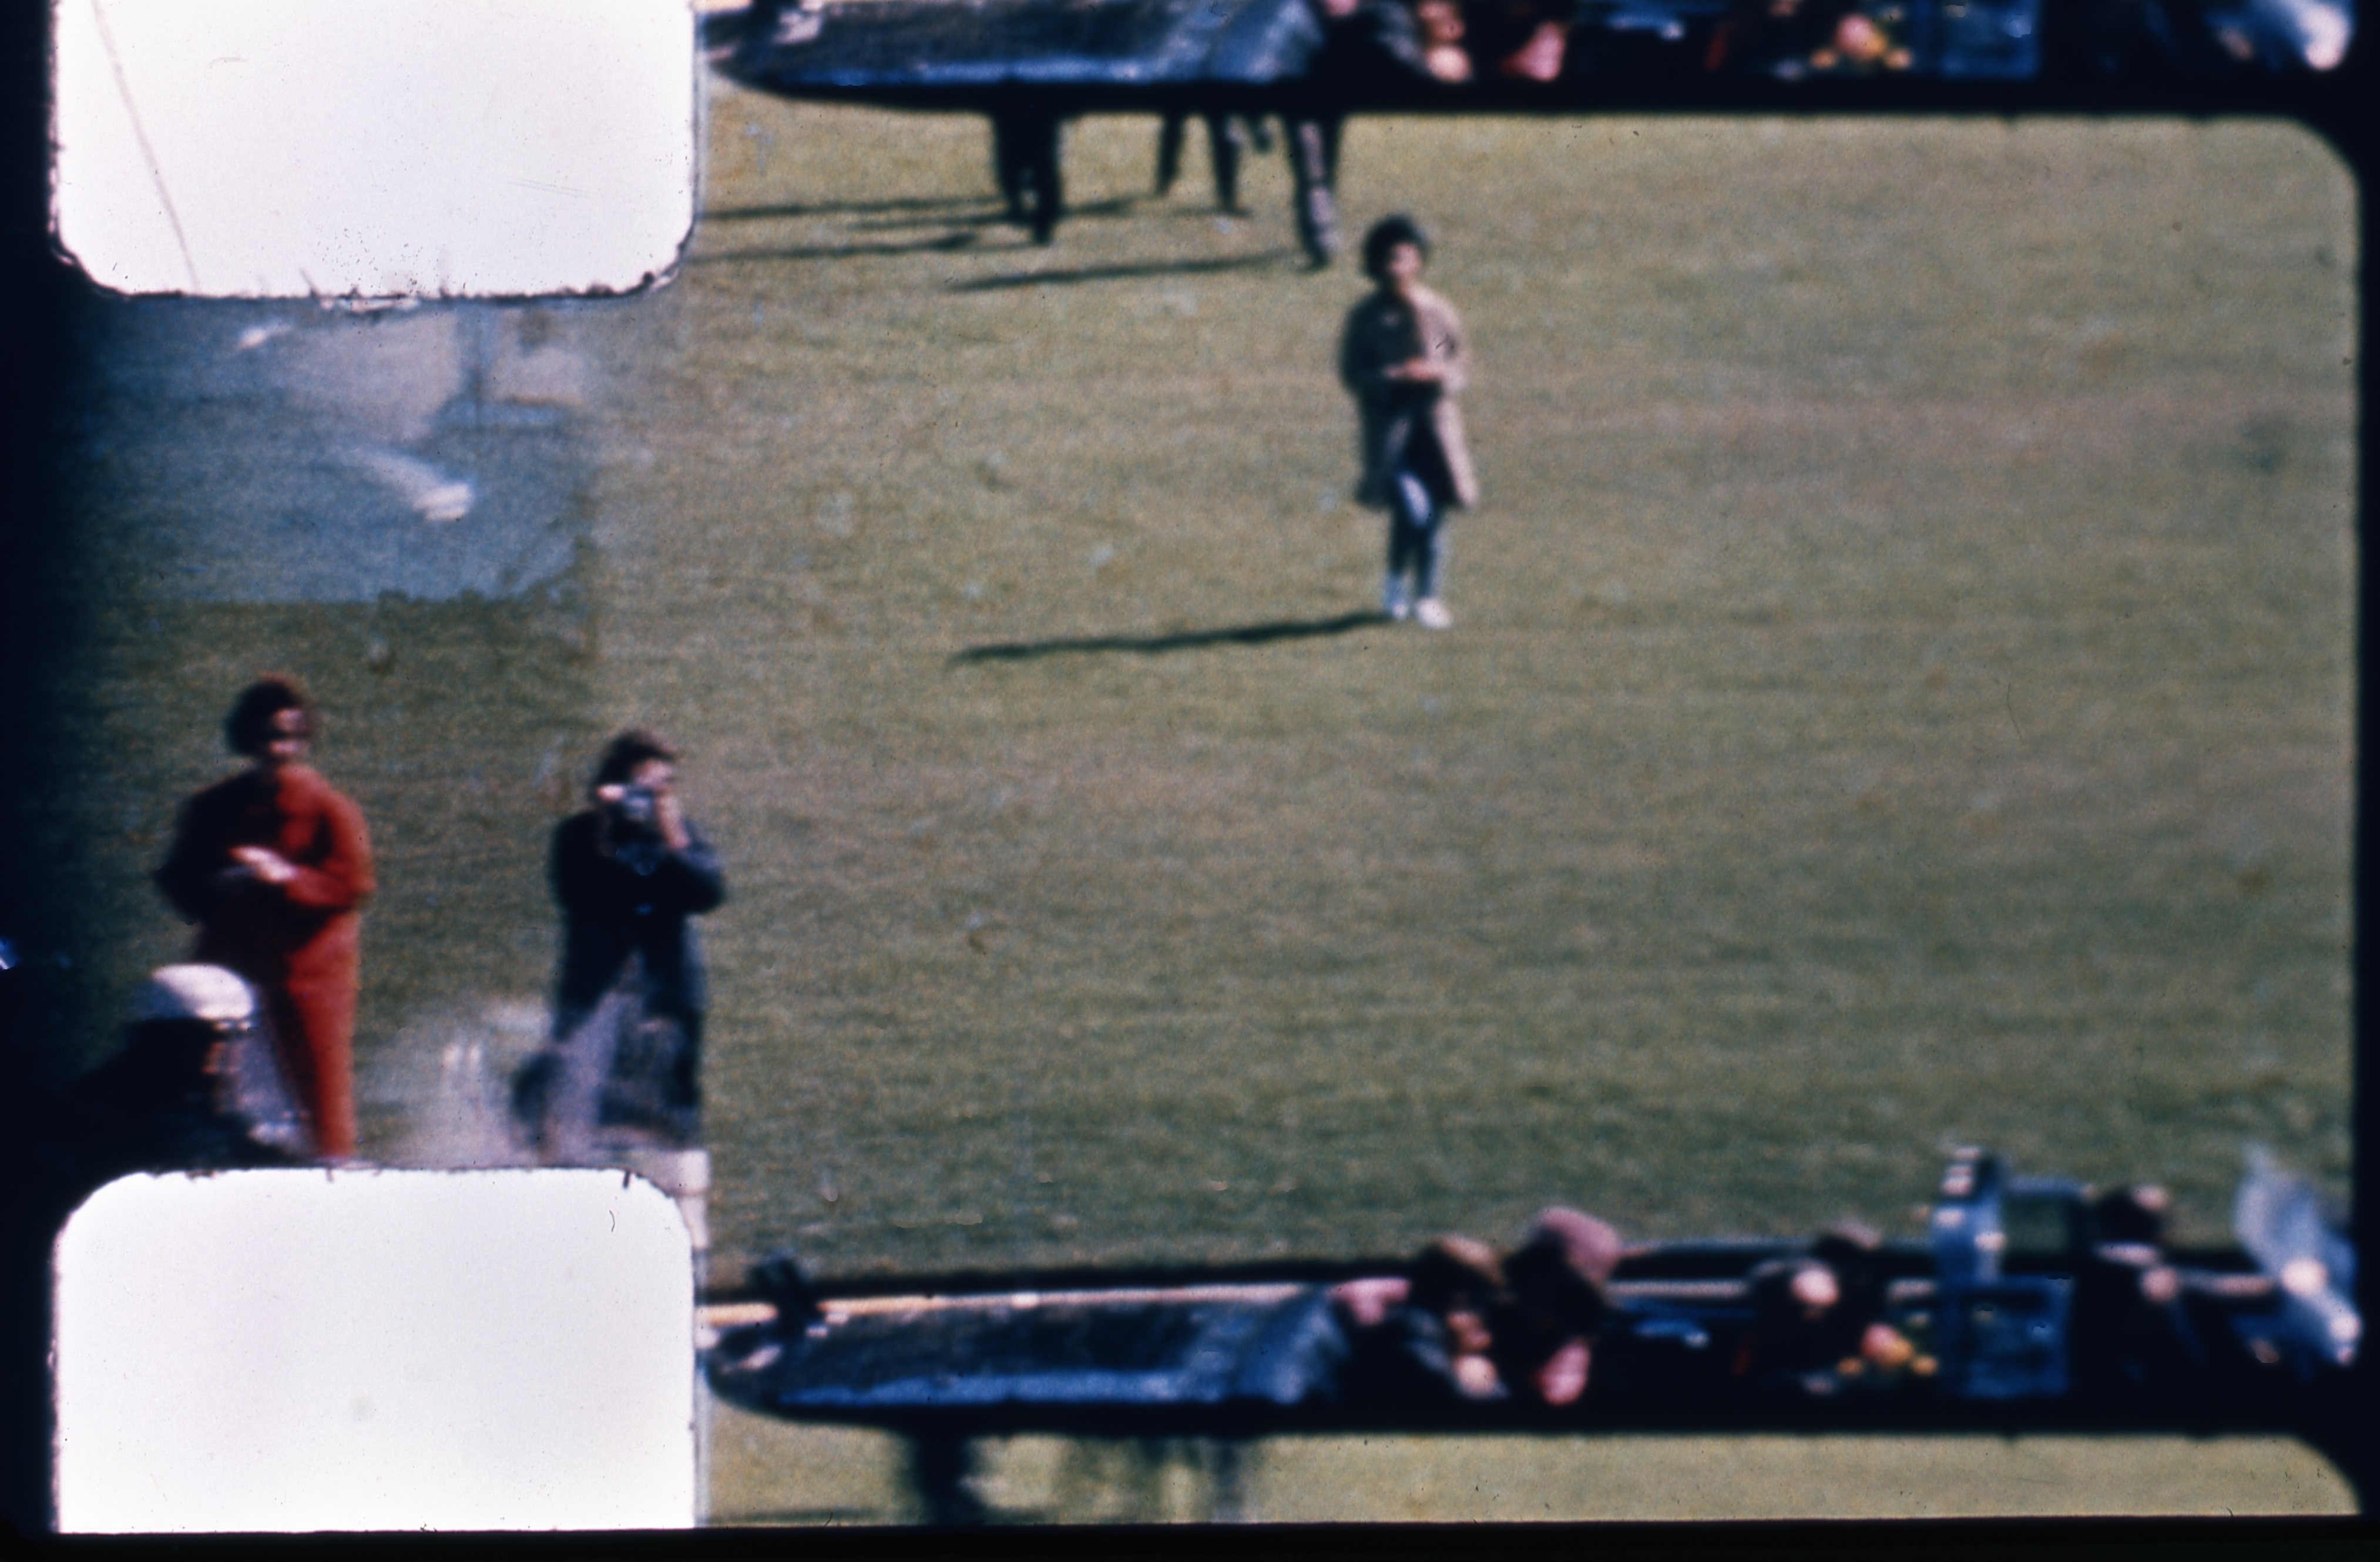 An image taken from frame Z310 of the Zapruder film